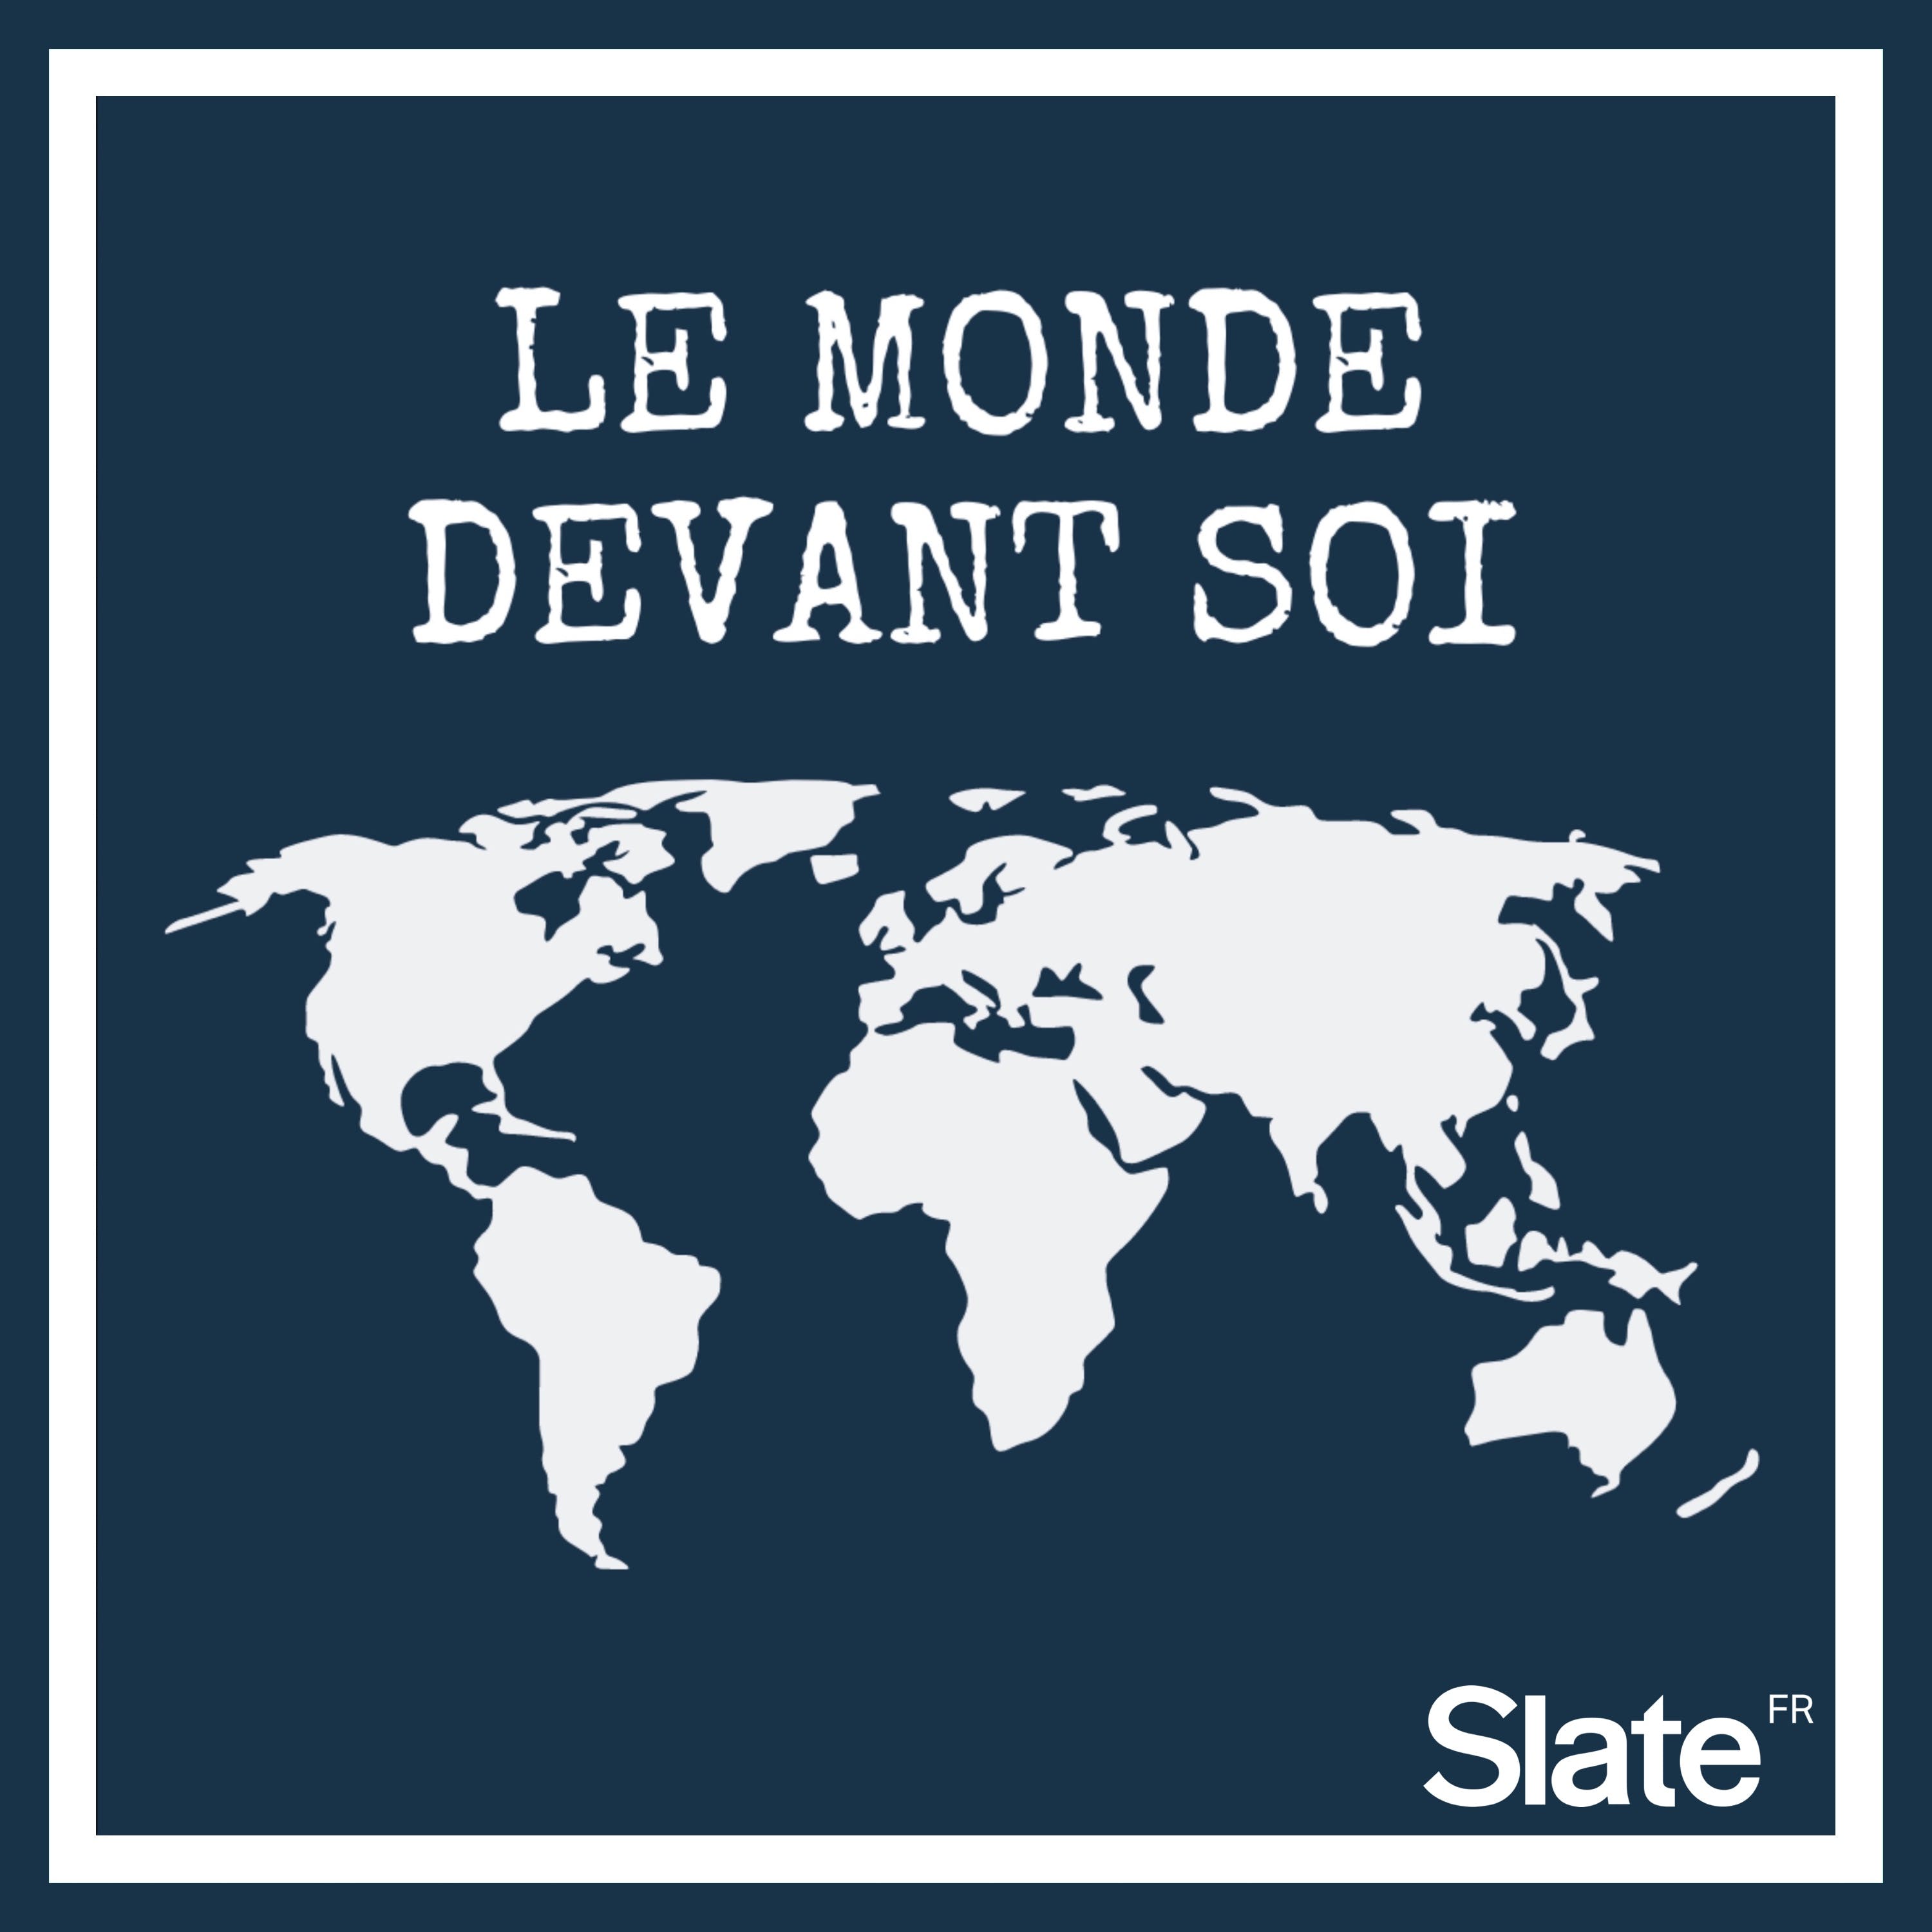 Le monde devant soi:Slate.fr